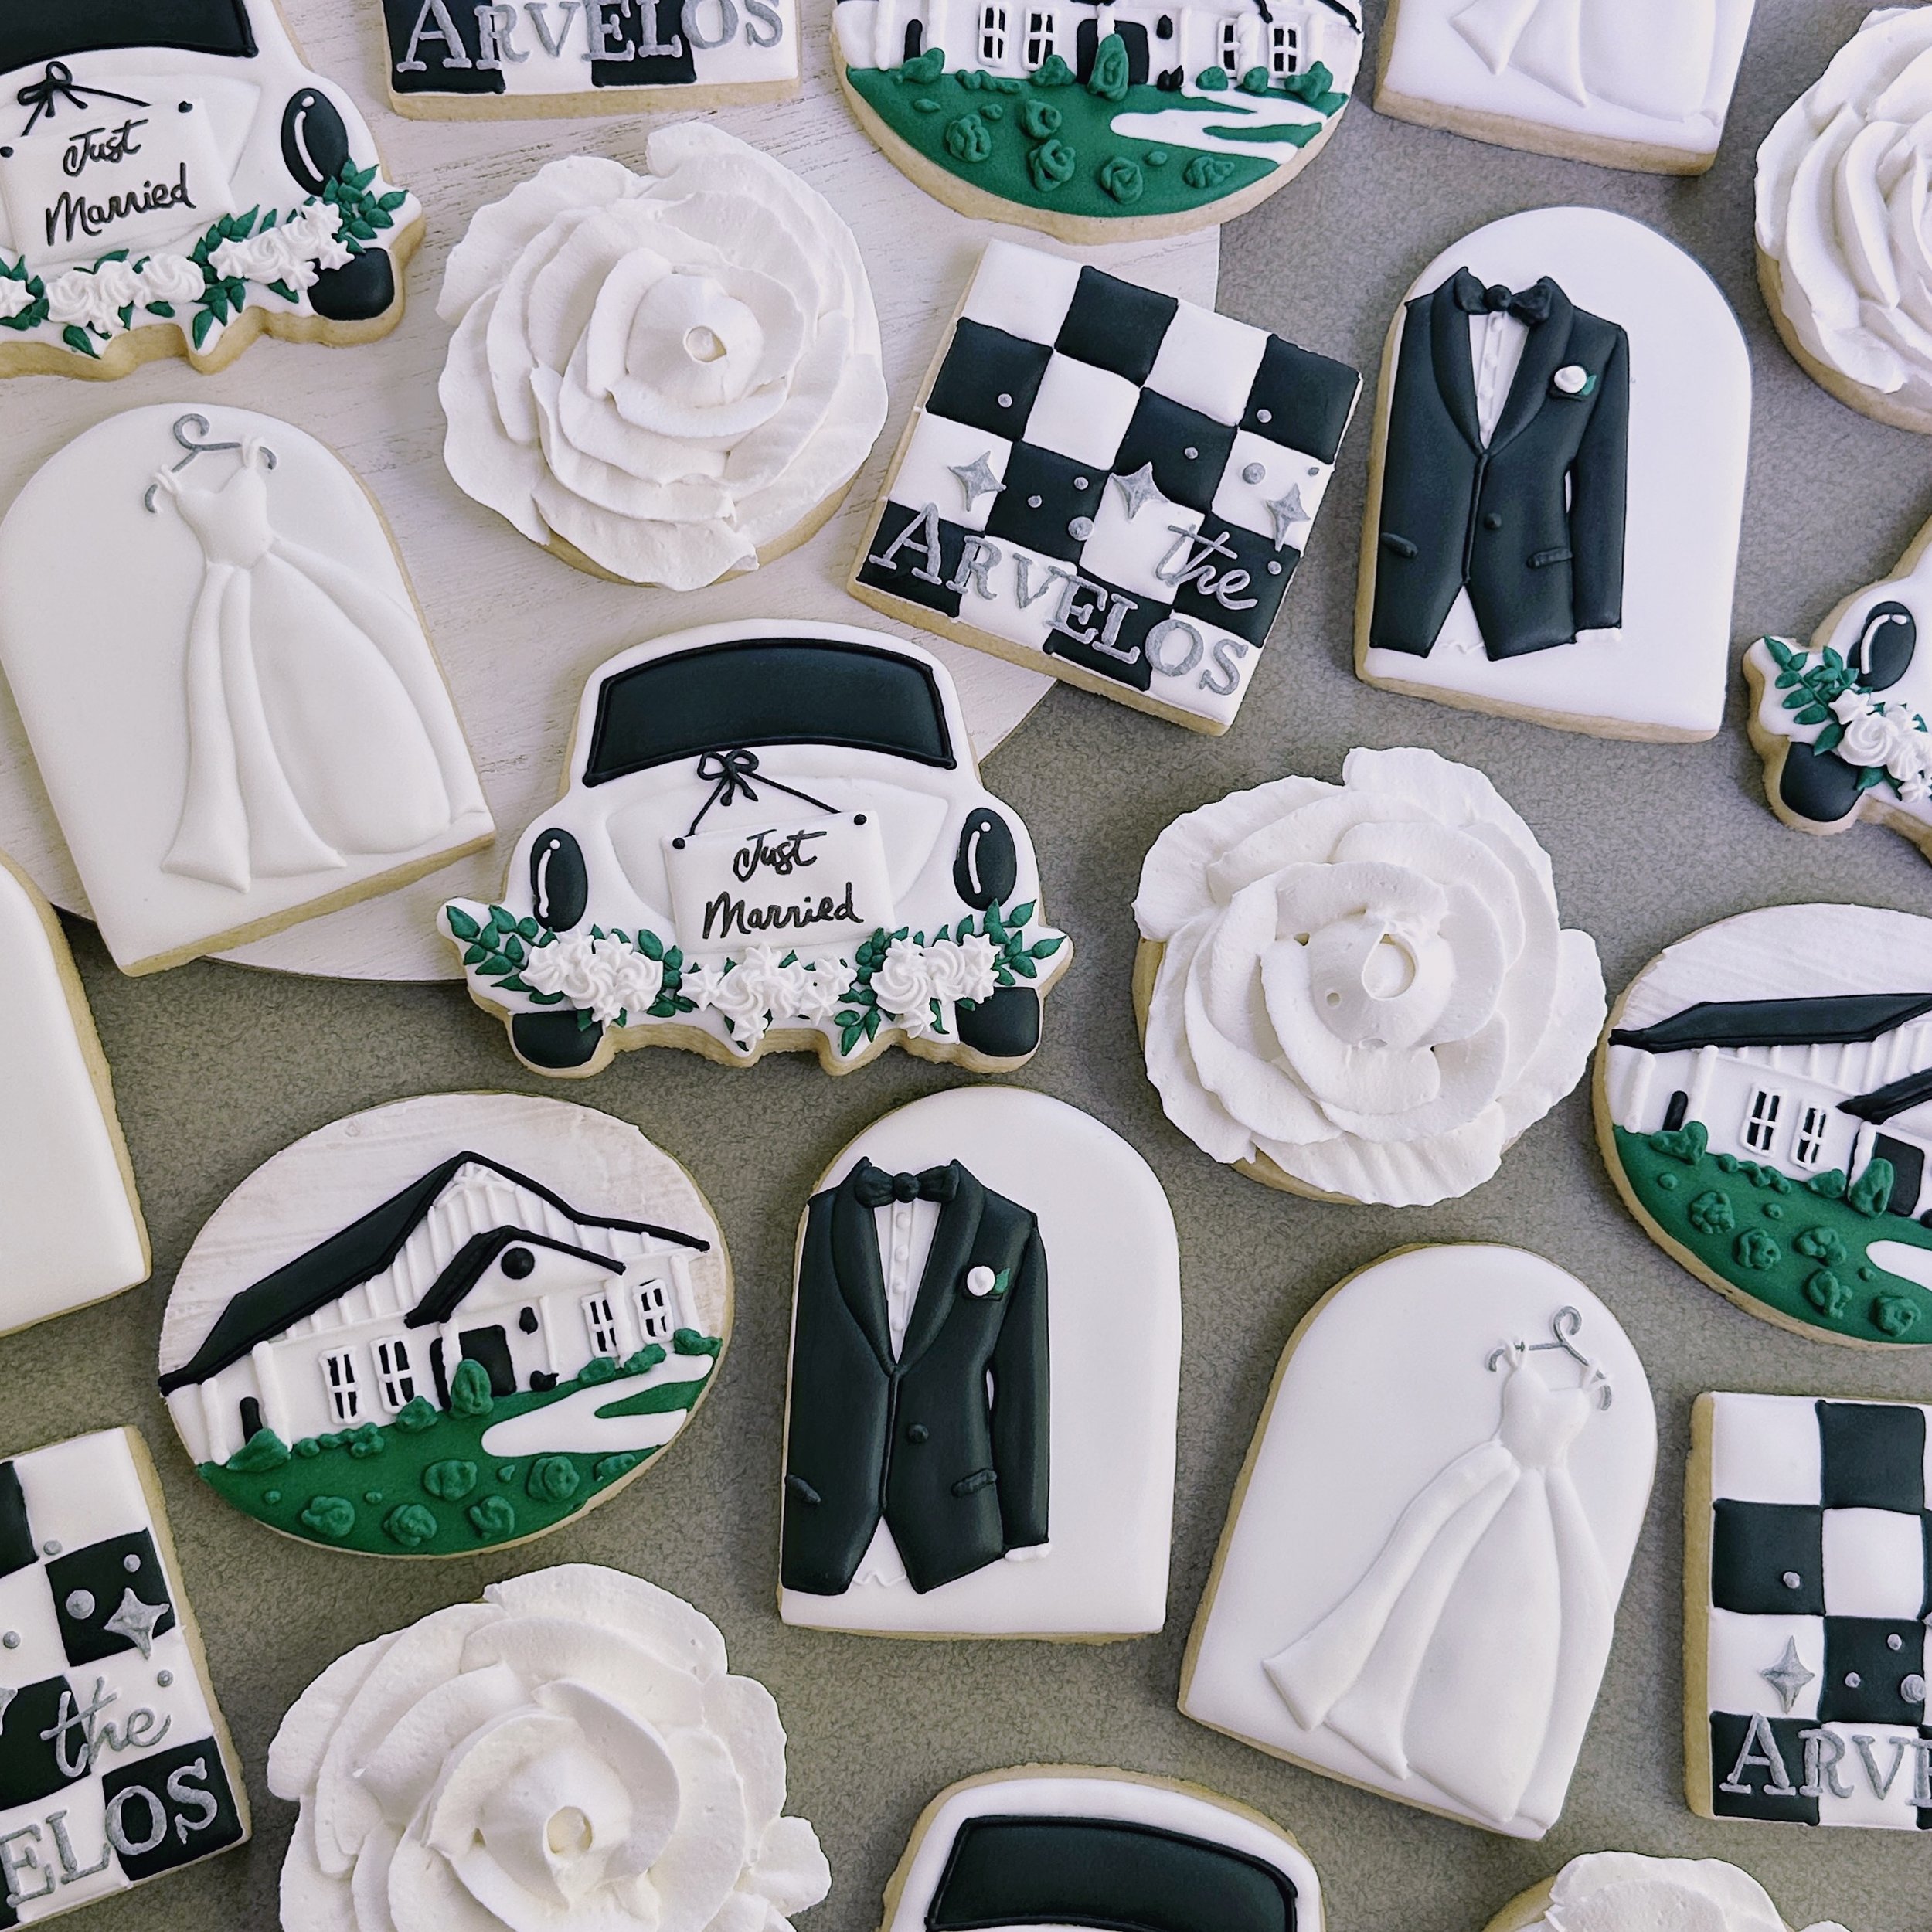 Classic wedding elegance in black and white 

#customcookiesatlanta #decoratedsugarcookies #atlcookies #weddingcookies #bridalcookies #blackandwhitecookies